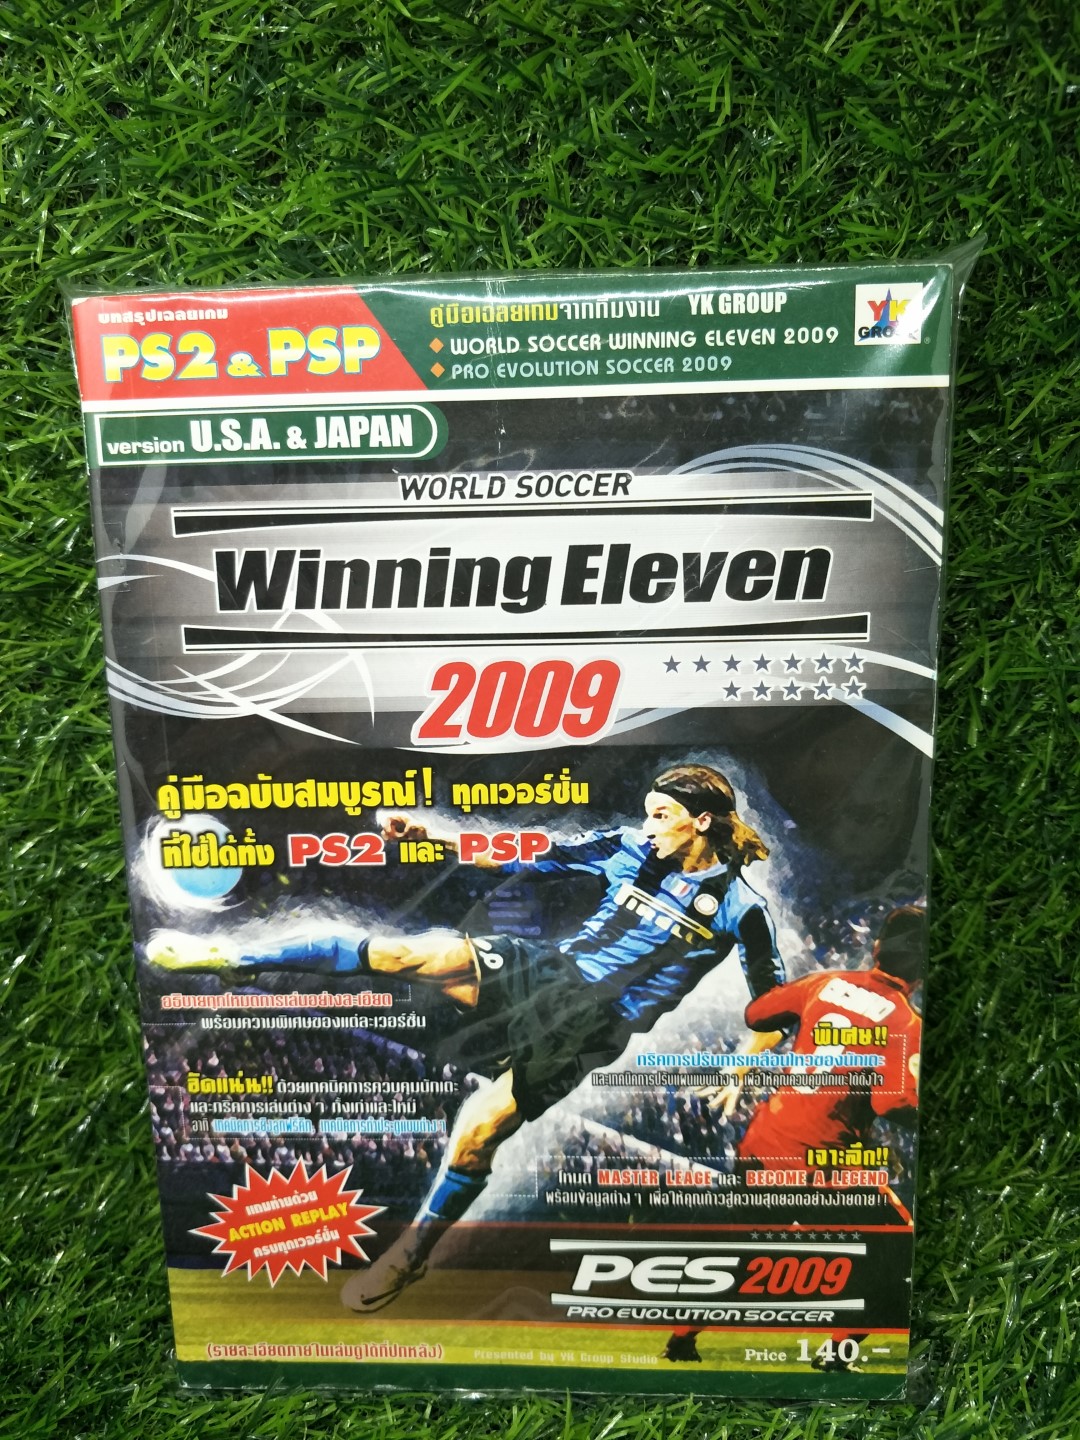 Winning eleven 2009 / Game book